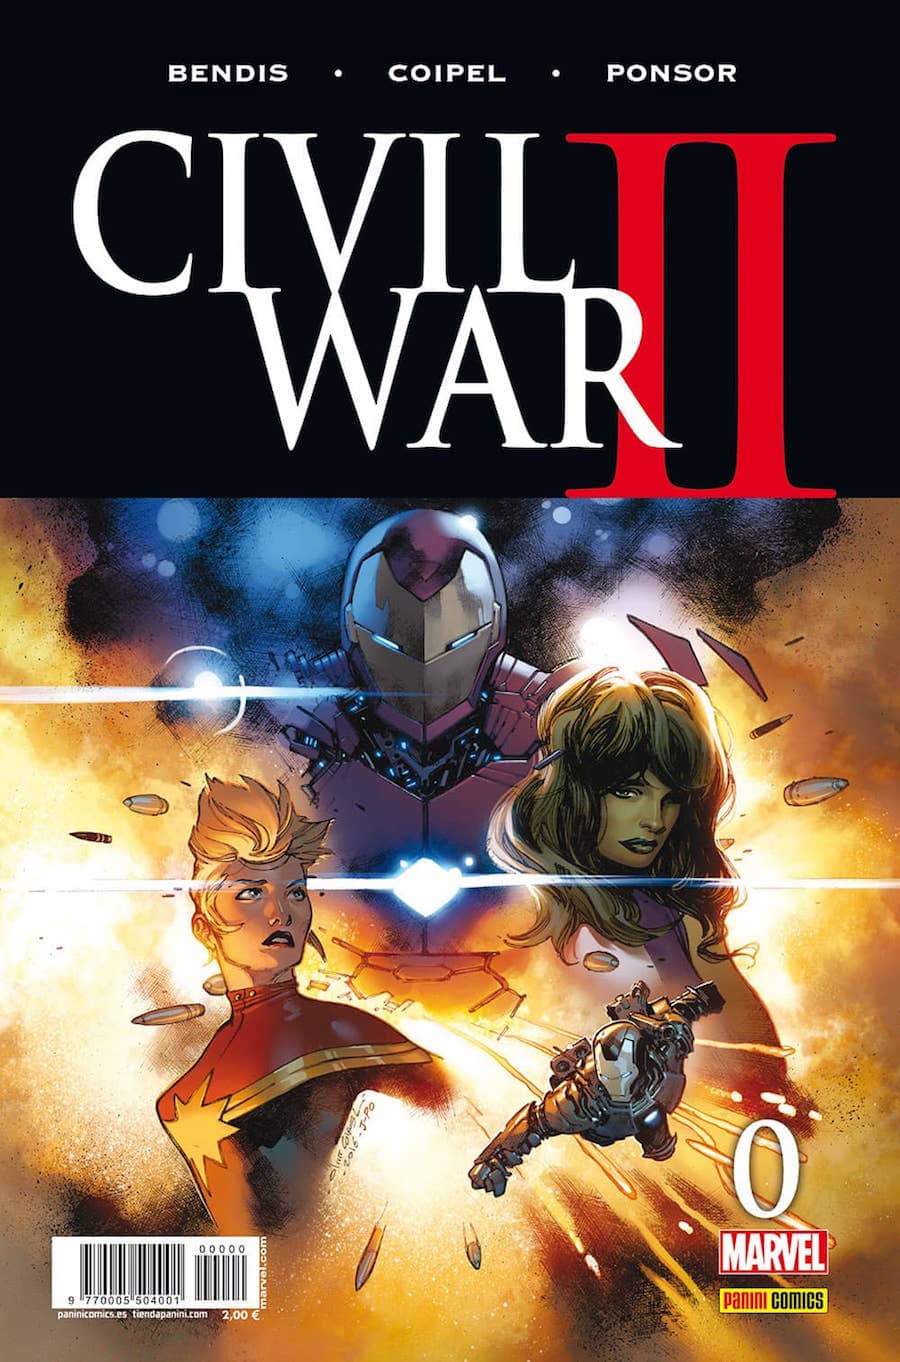 CIVIL WAR II N. 0